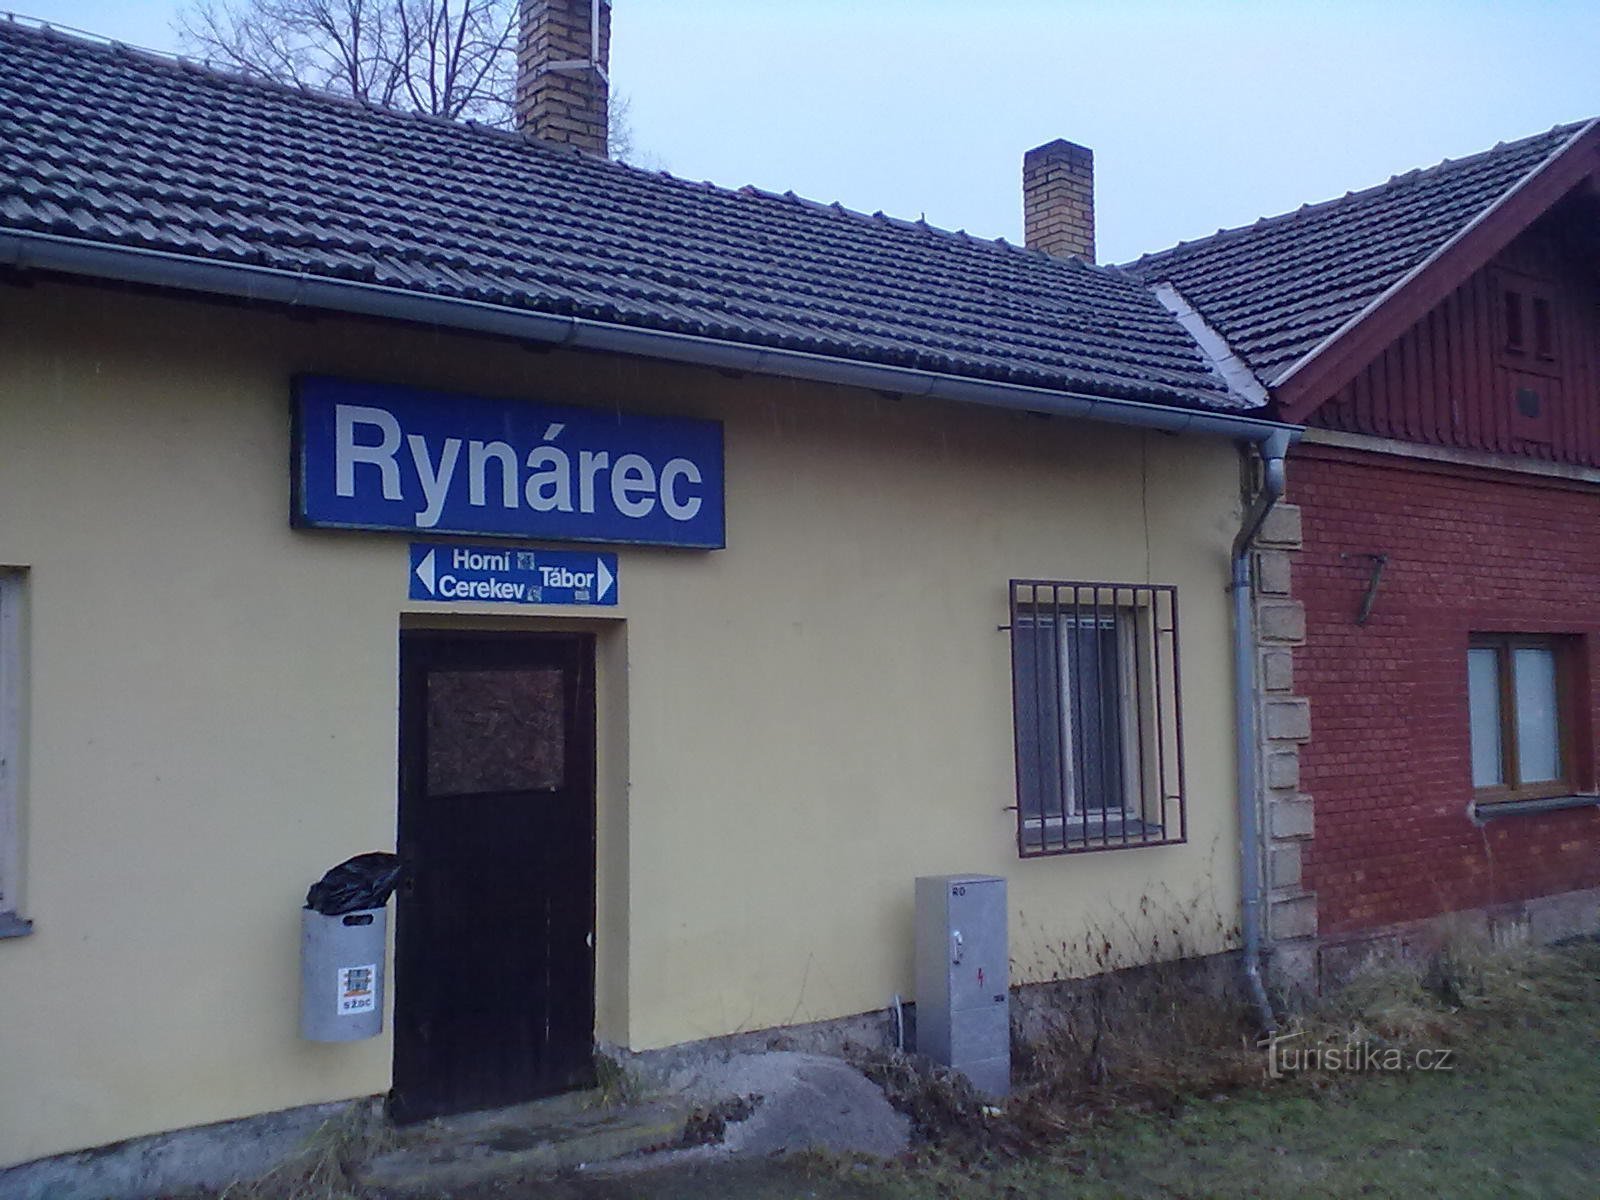 The beginning of the journey. Stop in Rynárec, just outside Pelhřimov. It has been raining bravely since morning.